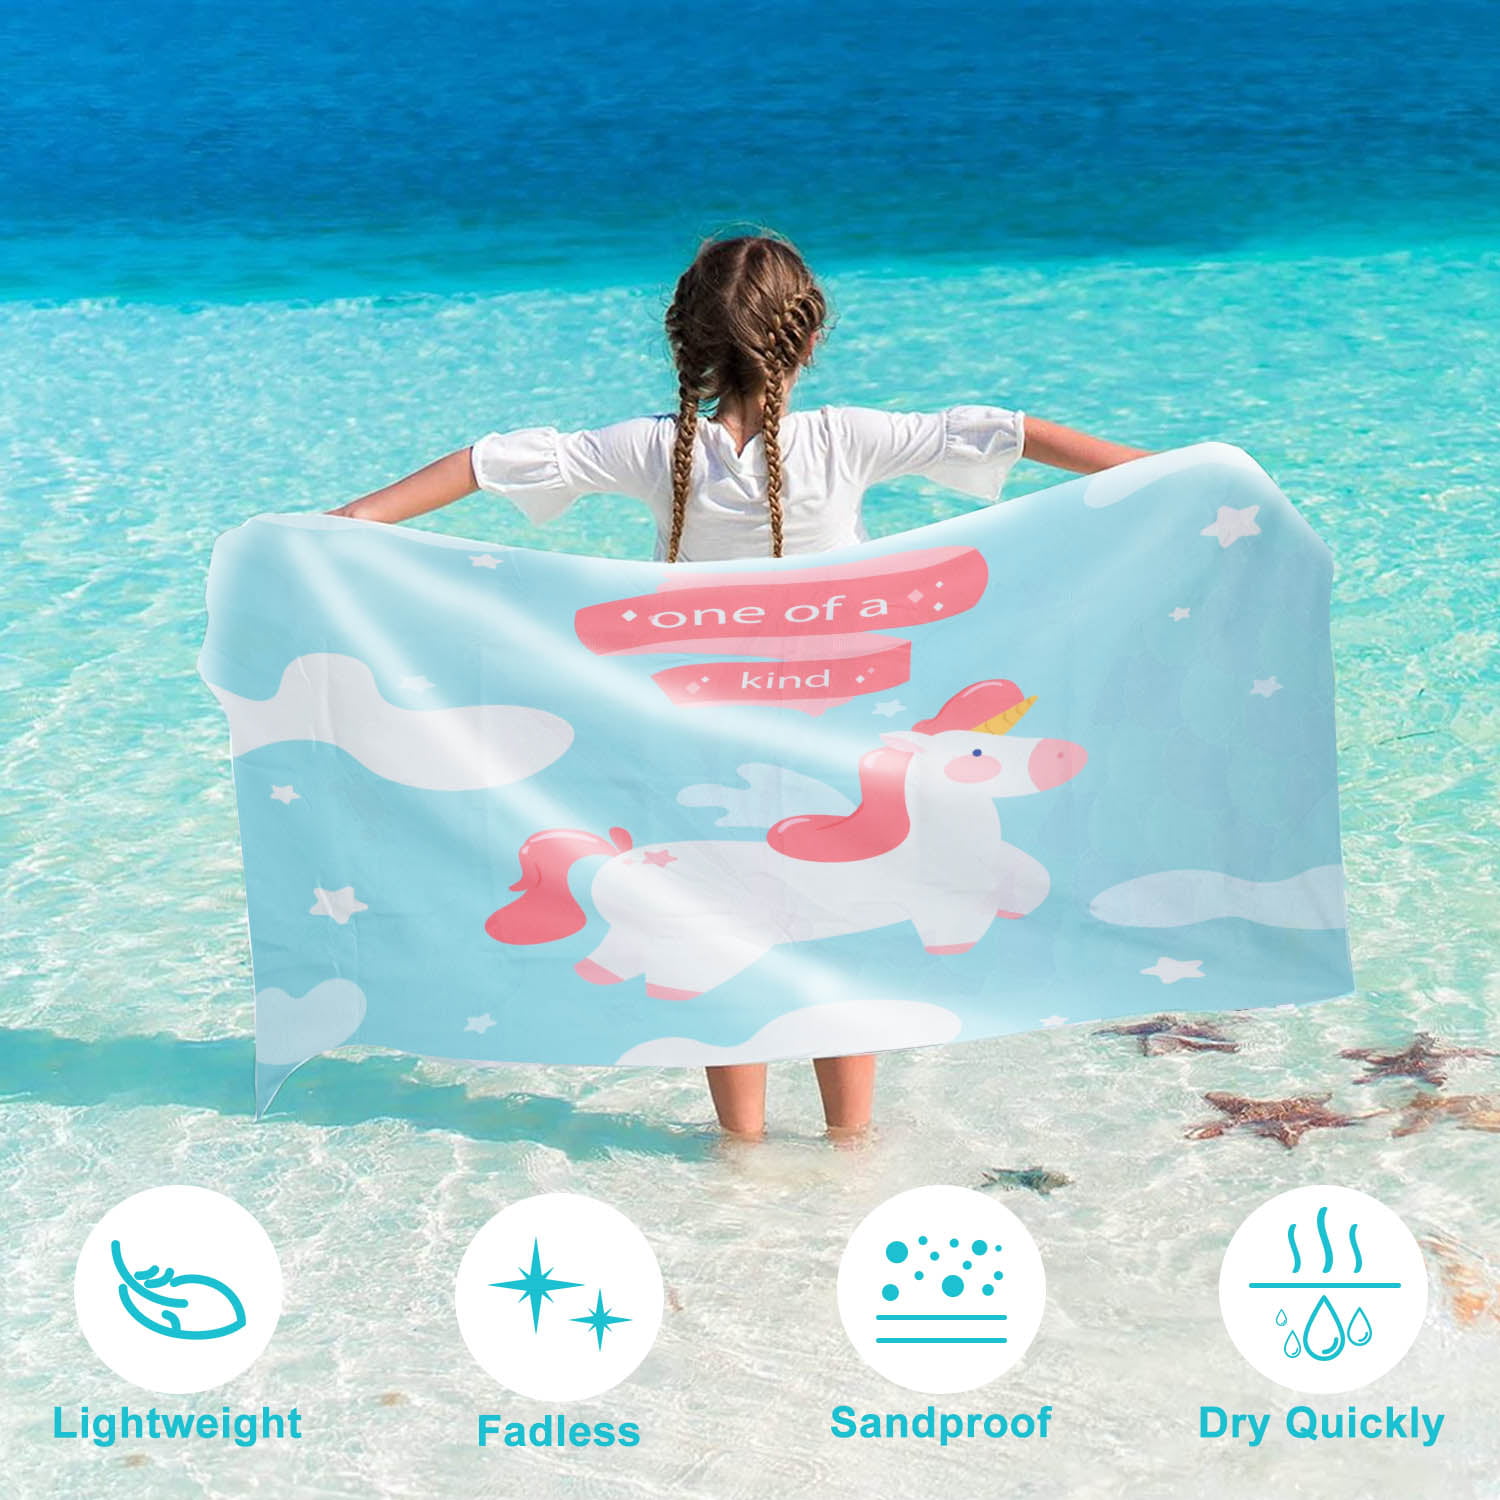 SDJMa Beach Towel Clearance Towels, 59 x 27 in Cool Travel Pool Swim Bath  Yoga Soft Towel Blanket, Ideal Gift for Women Men, Mom Dad, Best Friend